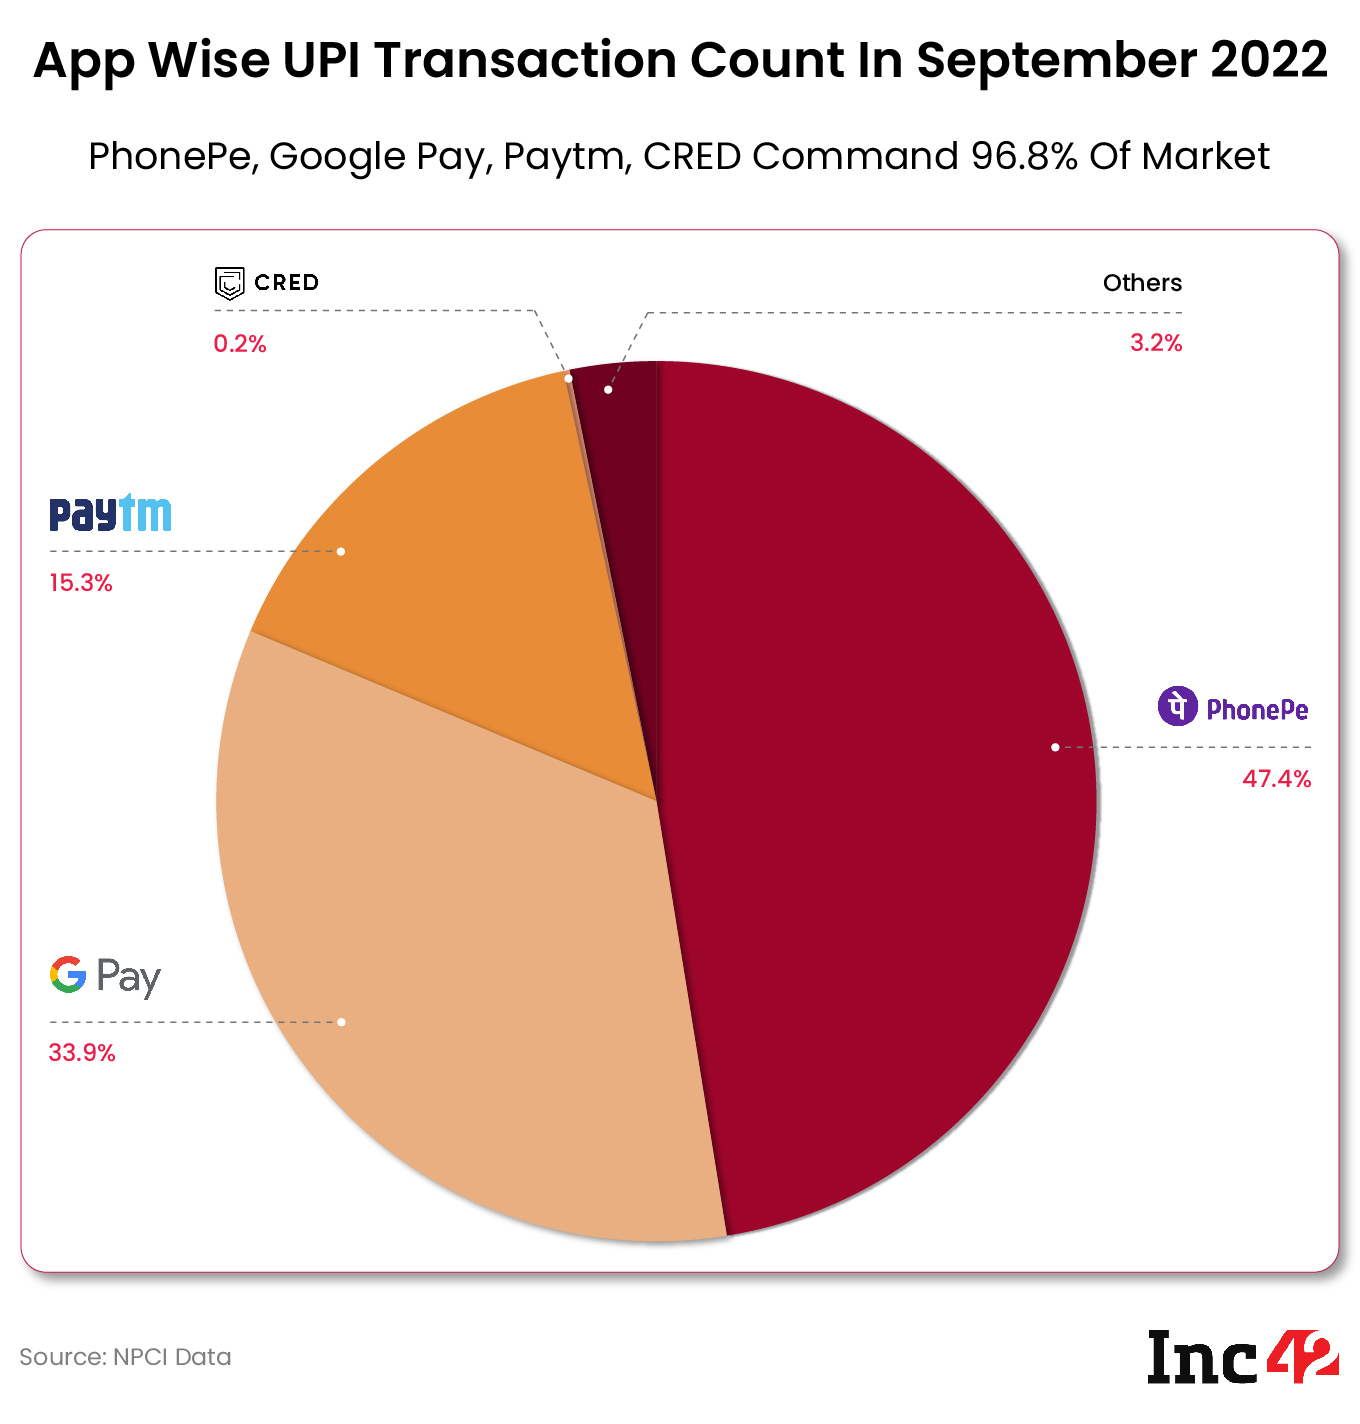 App Wise Transaction Count - September 2022